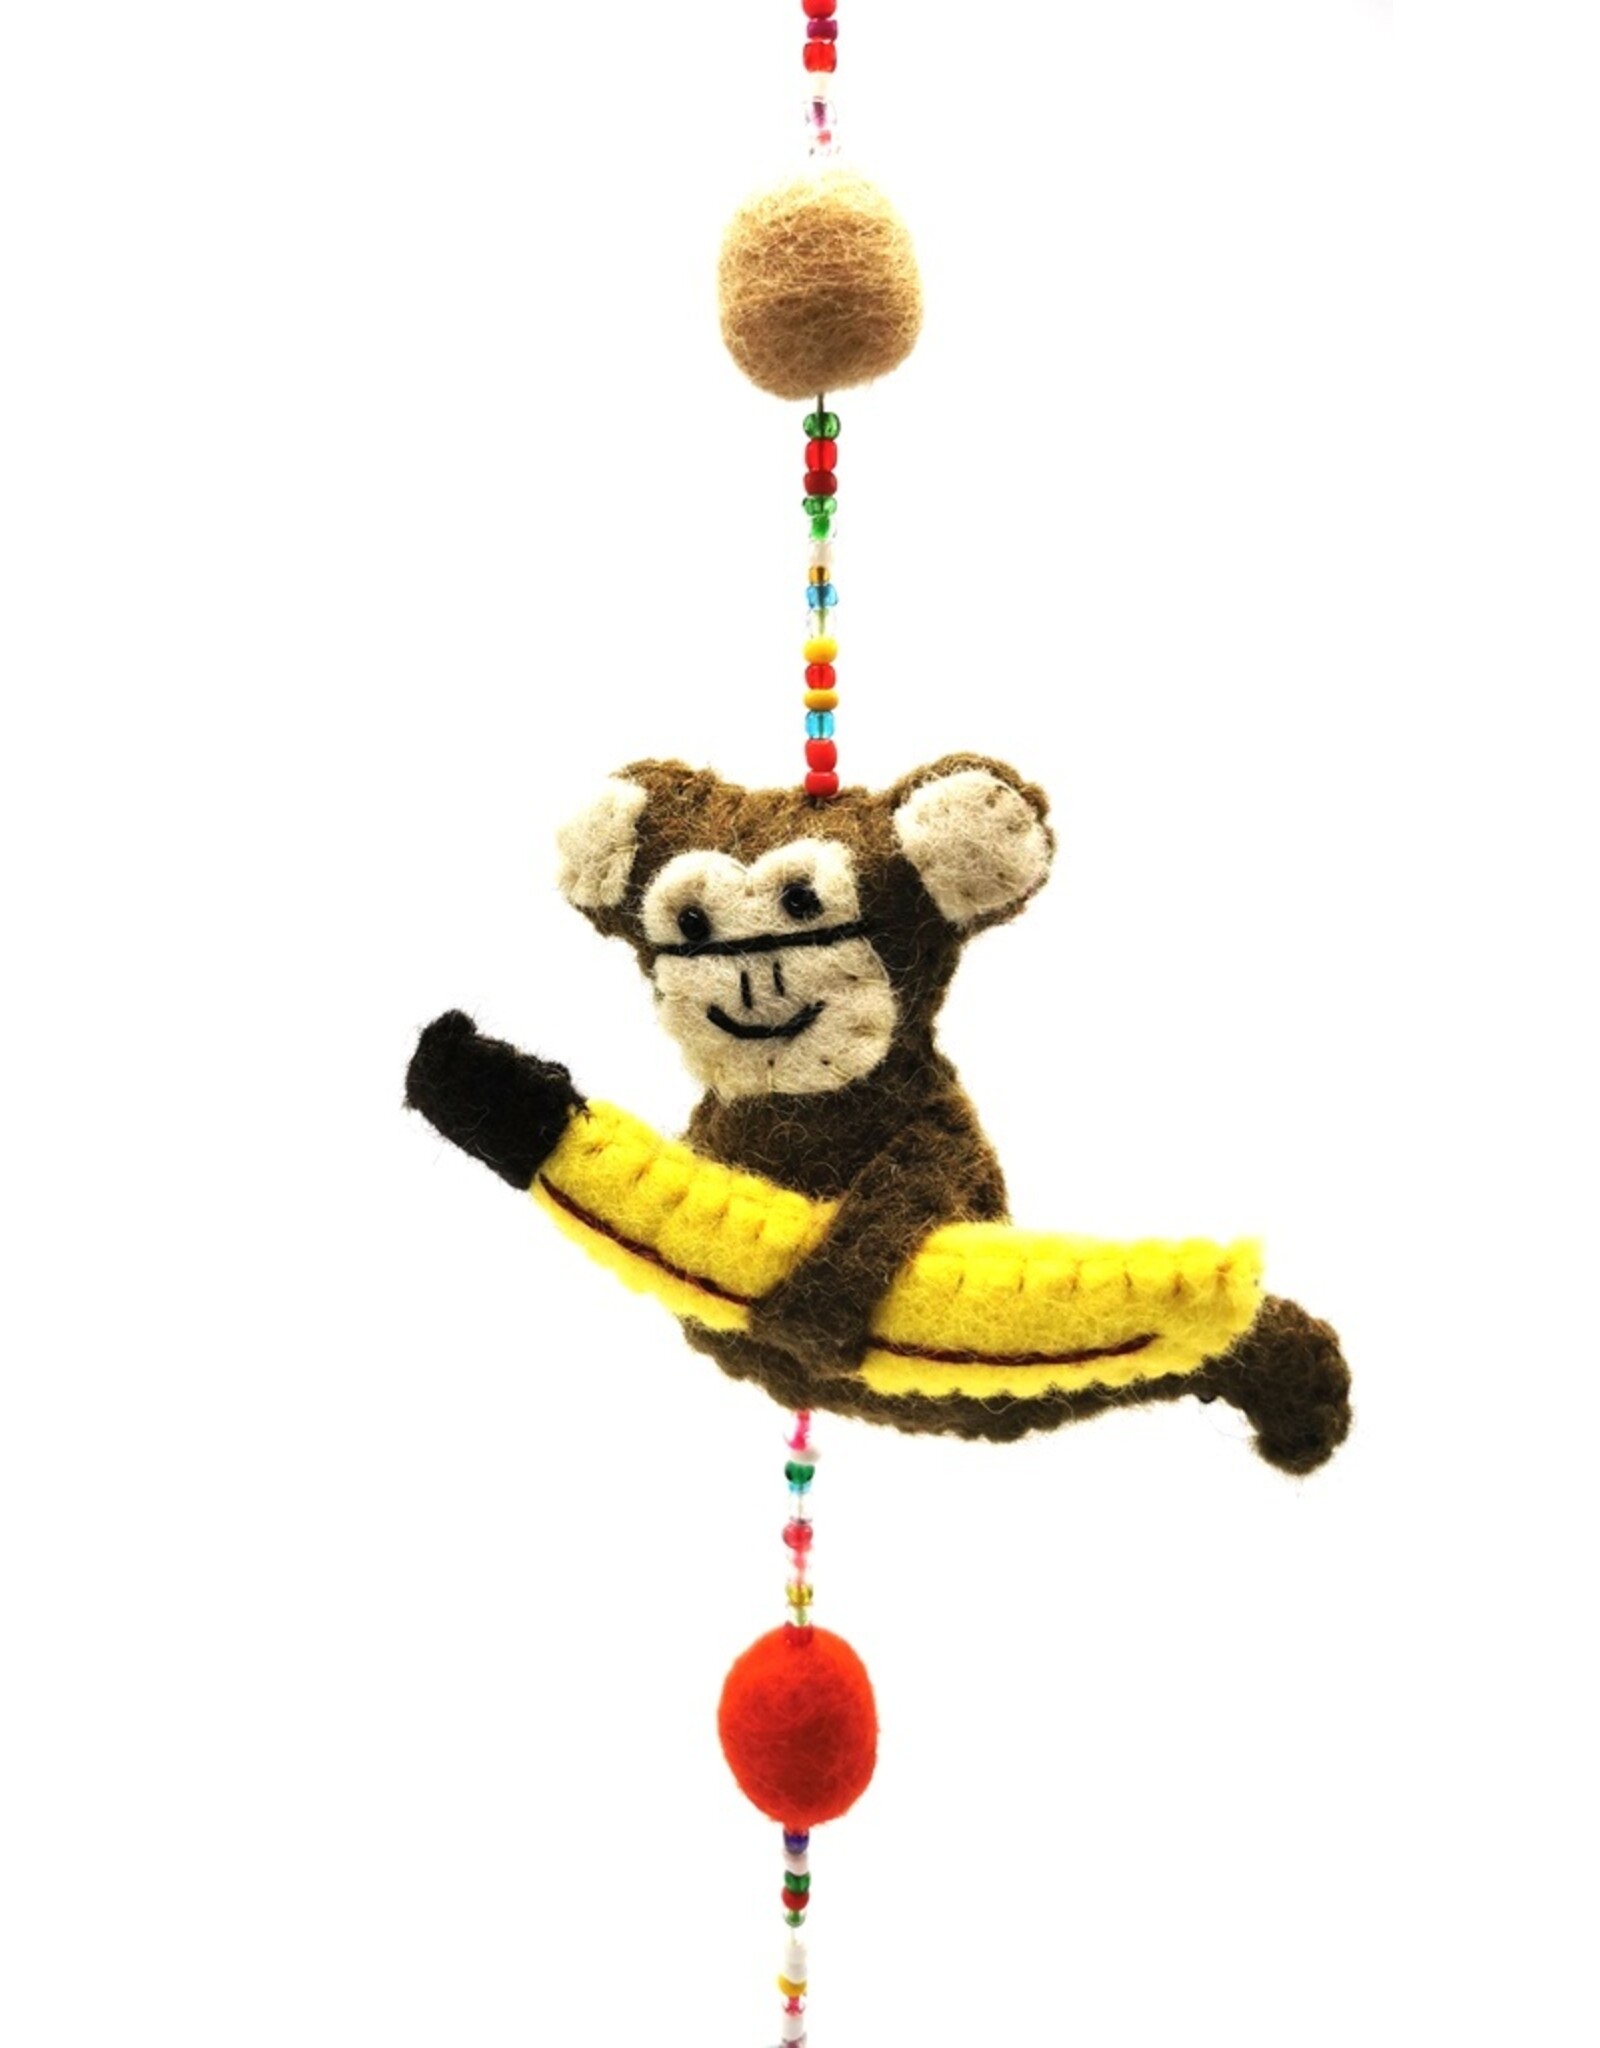 Trukado Miscellaneous - Felt Mobile Monkey handmade, approx 100cm